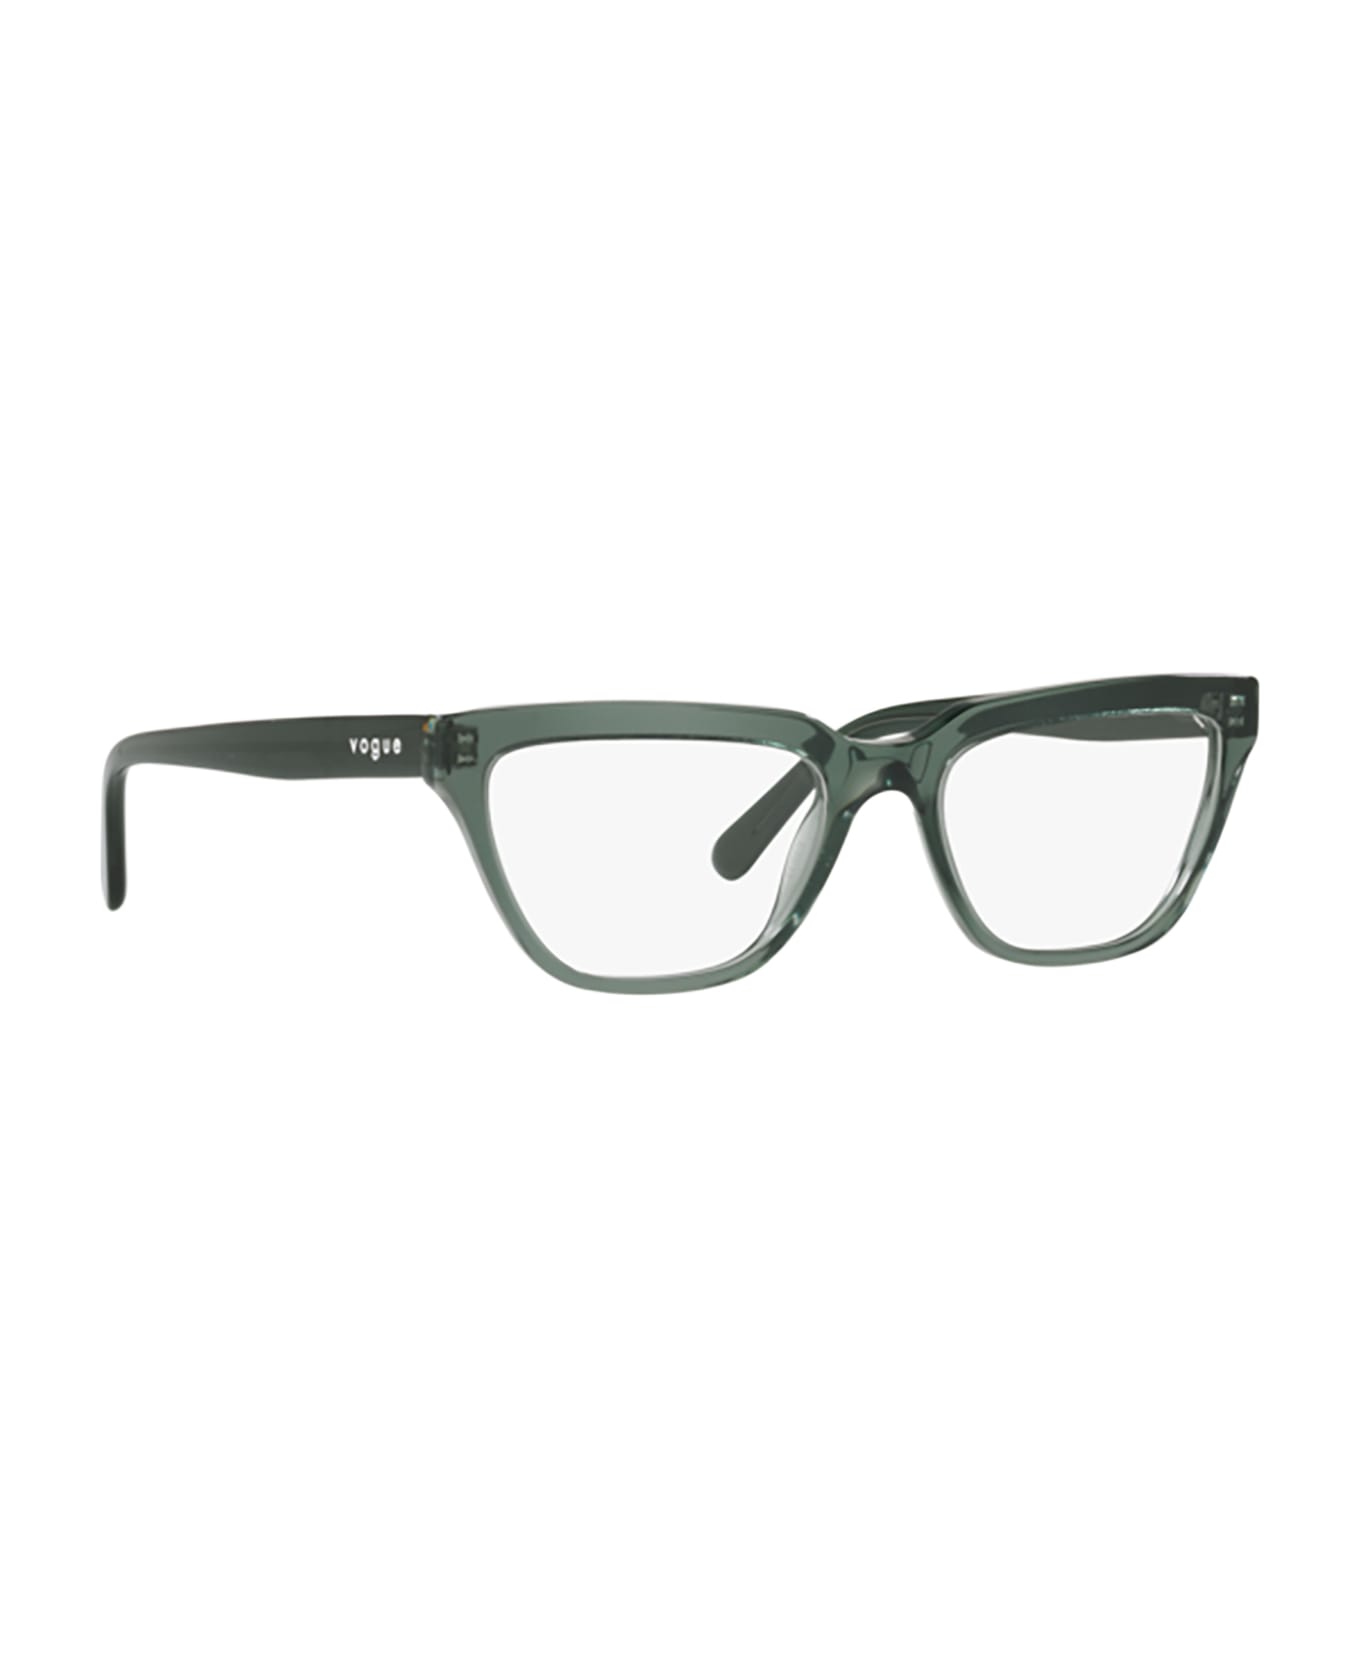 Vogue Eyewear Vo5443 Transparent Green Glasses - Transparent Green アイウェア